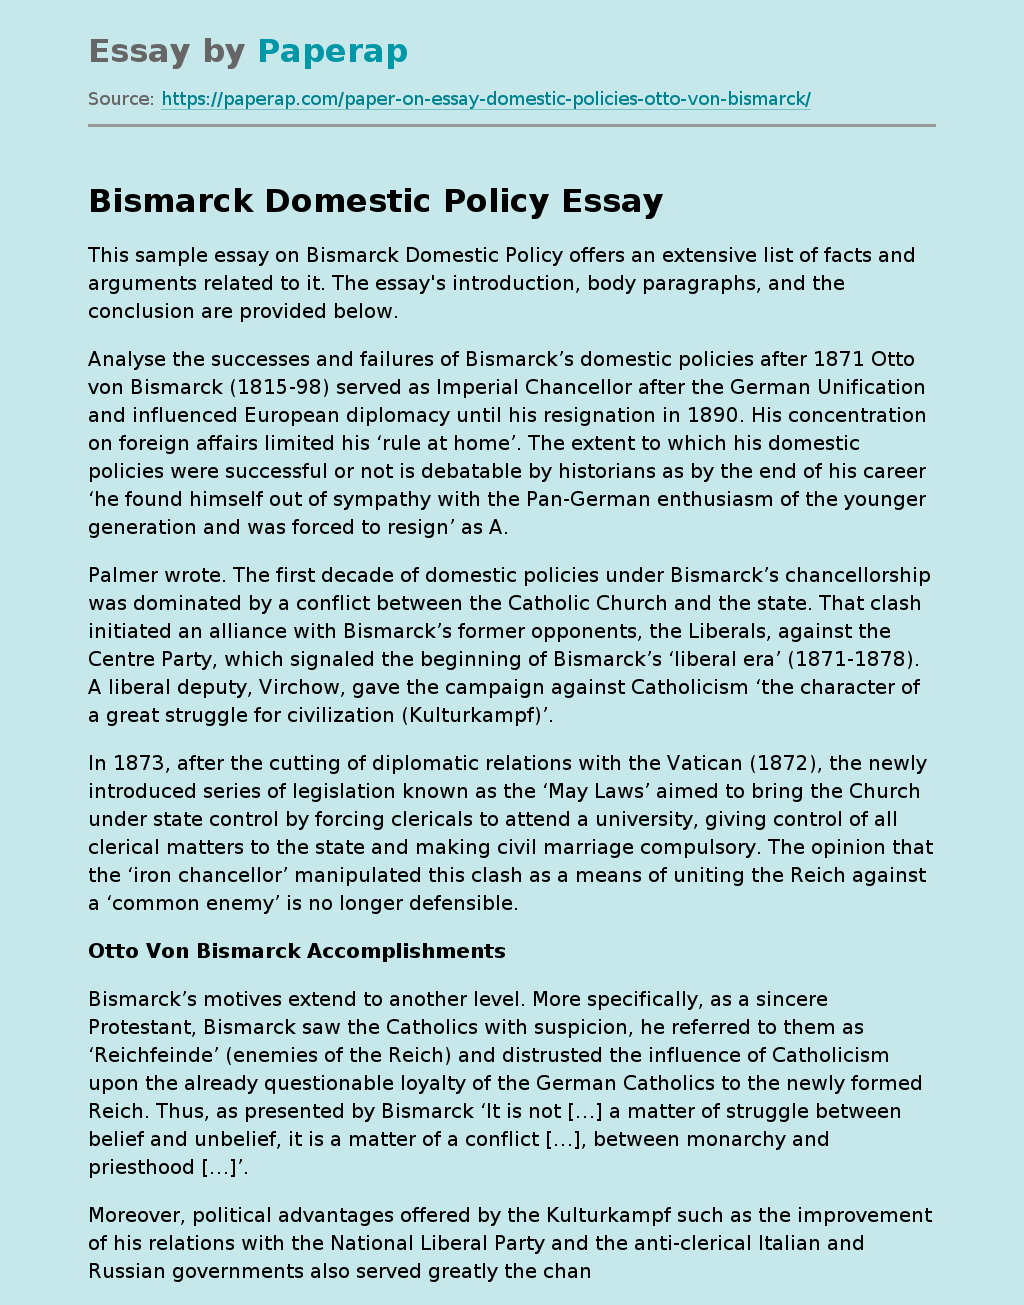 Bismarck Domestic Policy